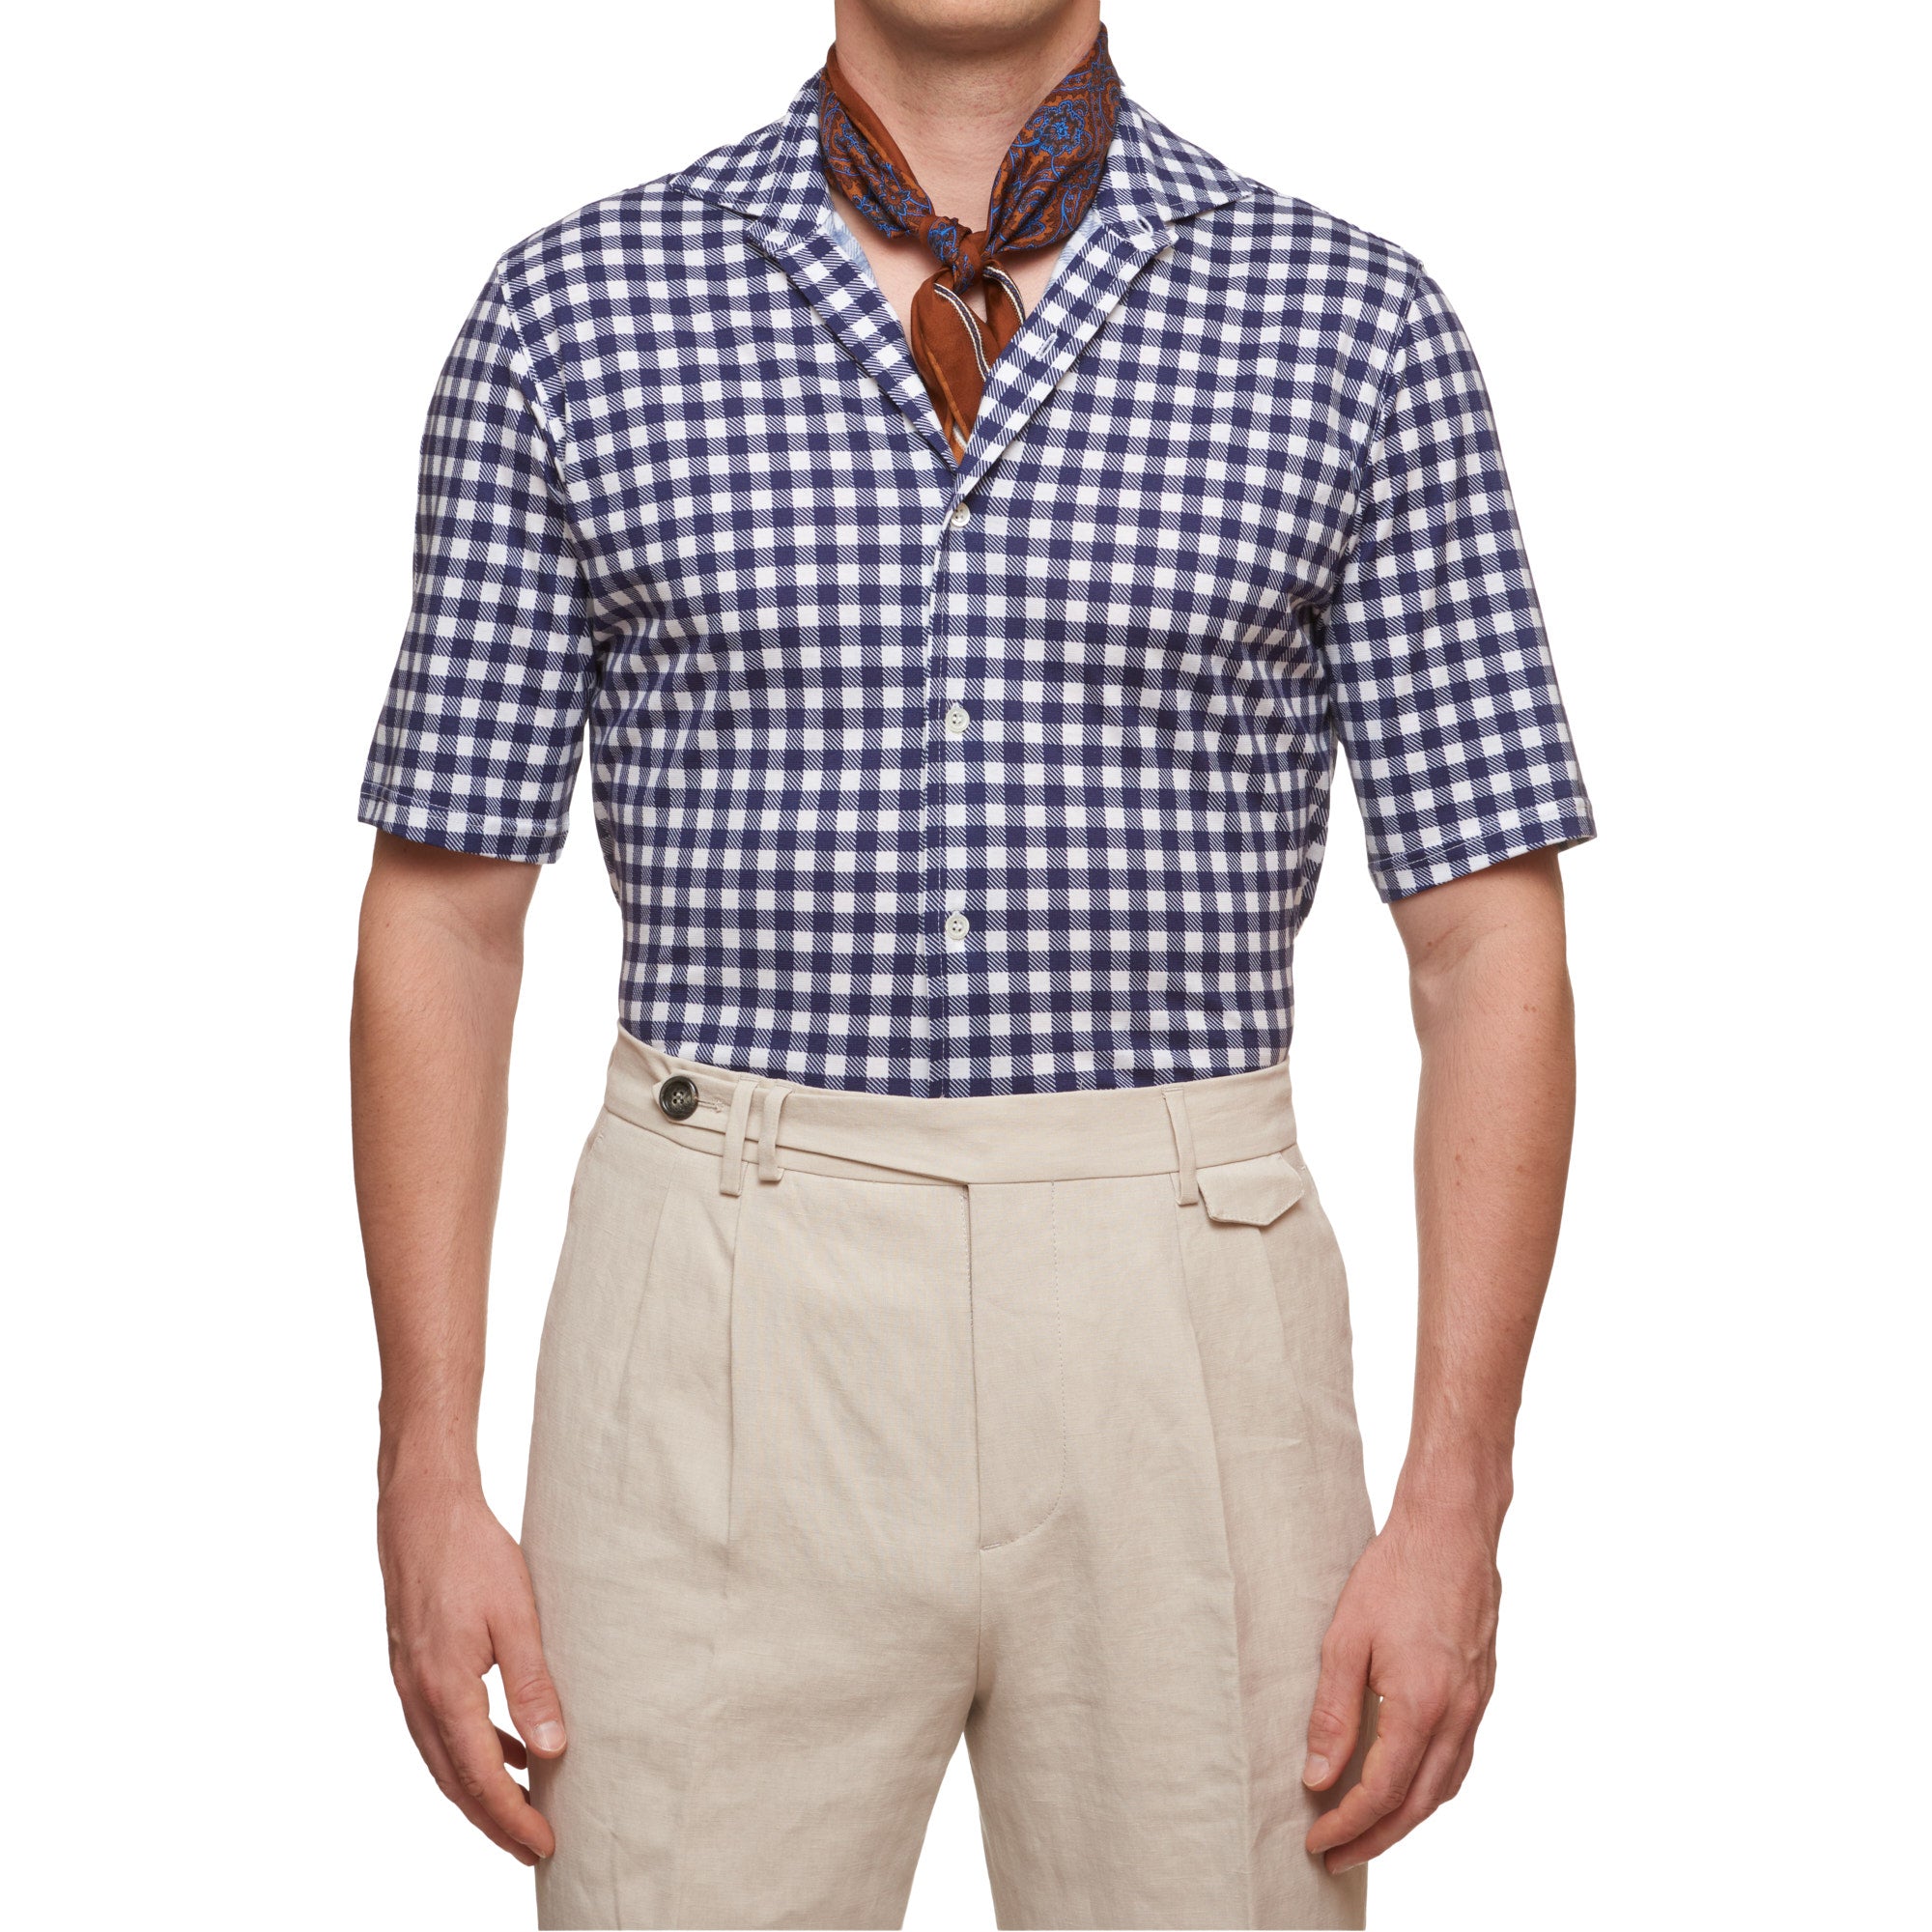 SARTORIO Napoli by KITON Blue Gingham Plaid Cotton Short Sleeve Casual Shirt NEW